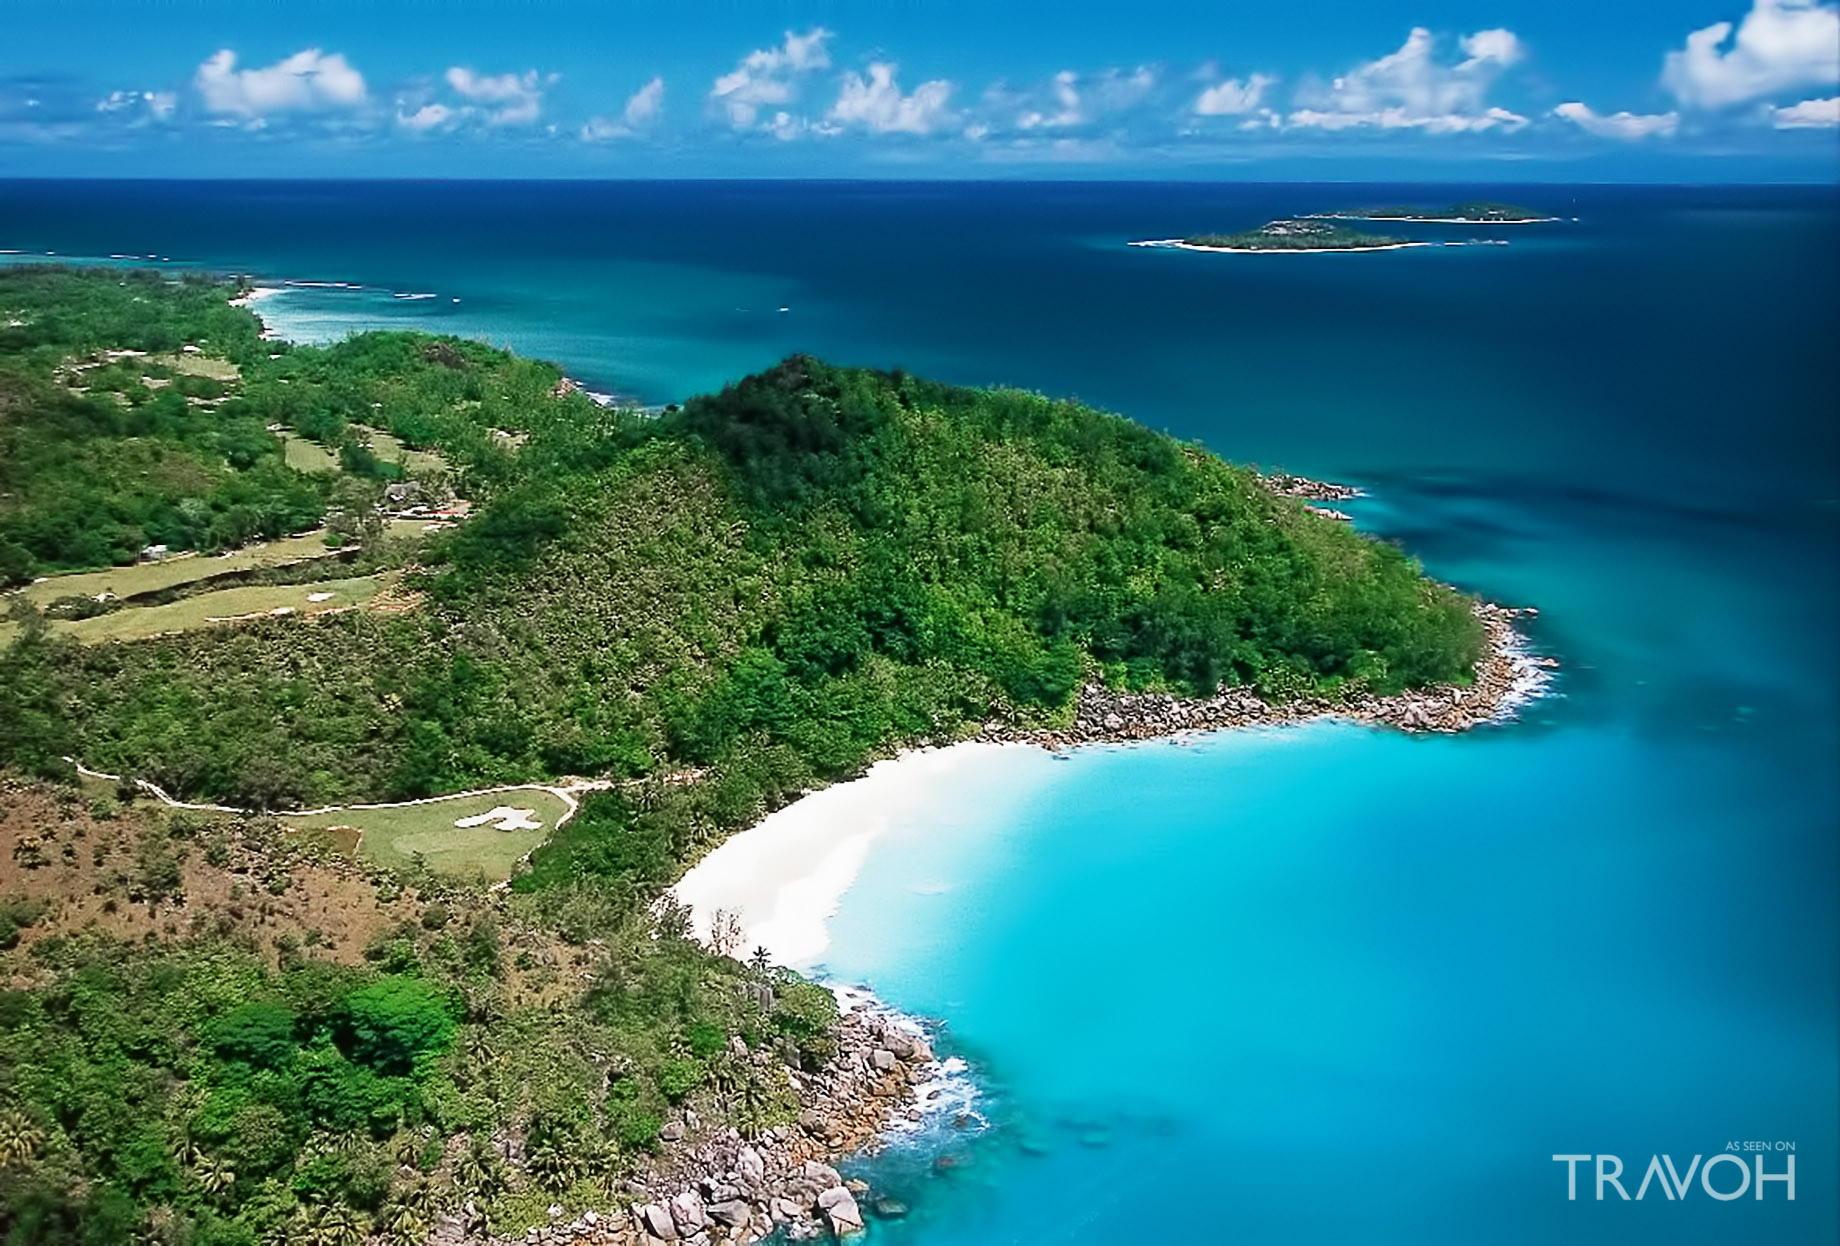 Praslin, Seychelles - An Exotic Luxury Island Escape off the Eastern Coast of Africa